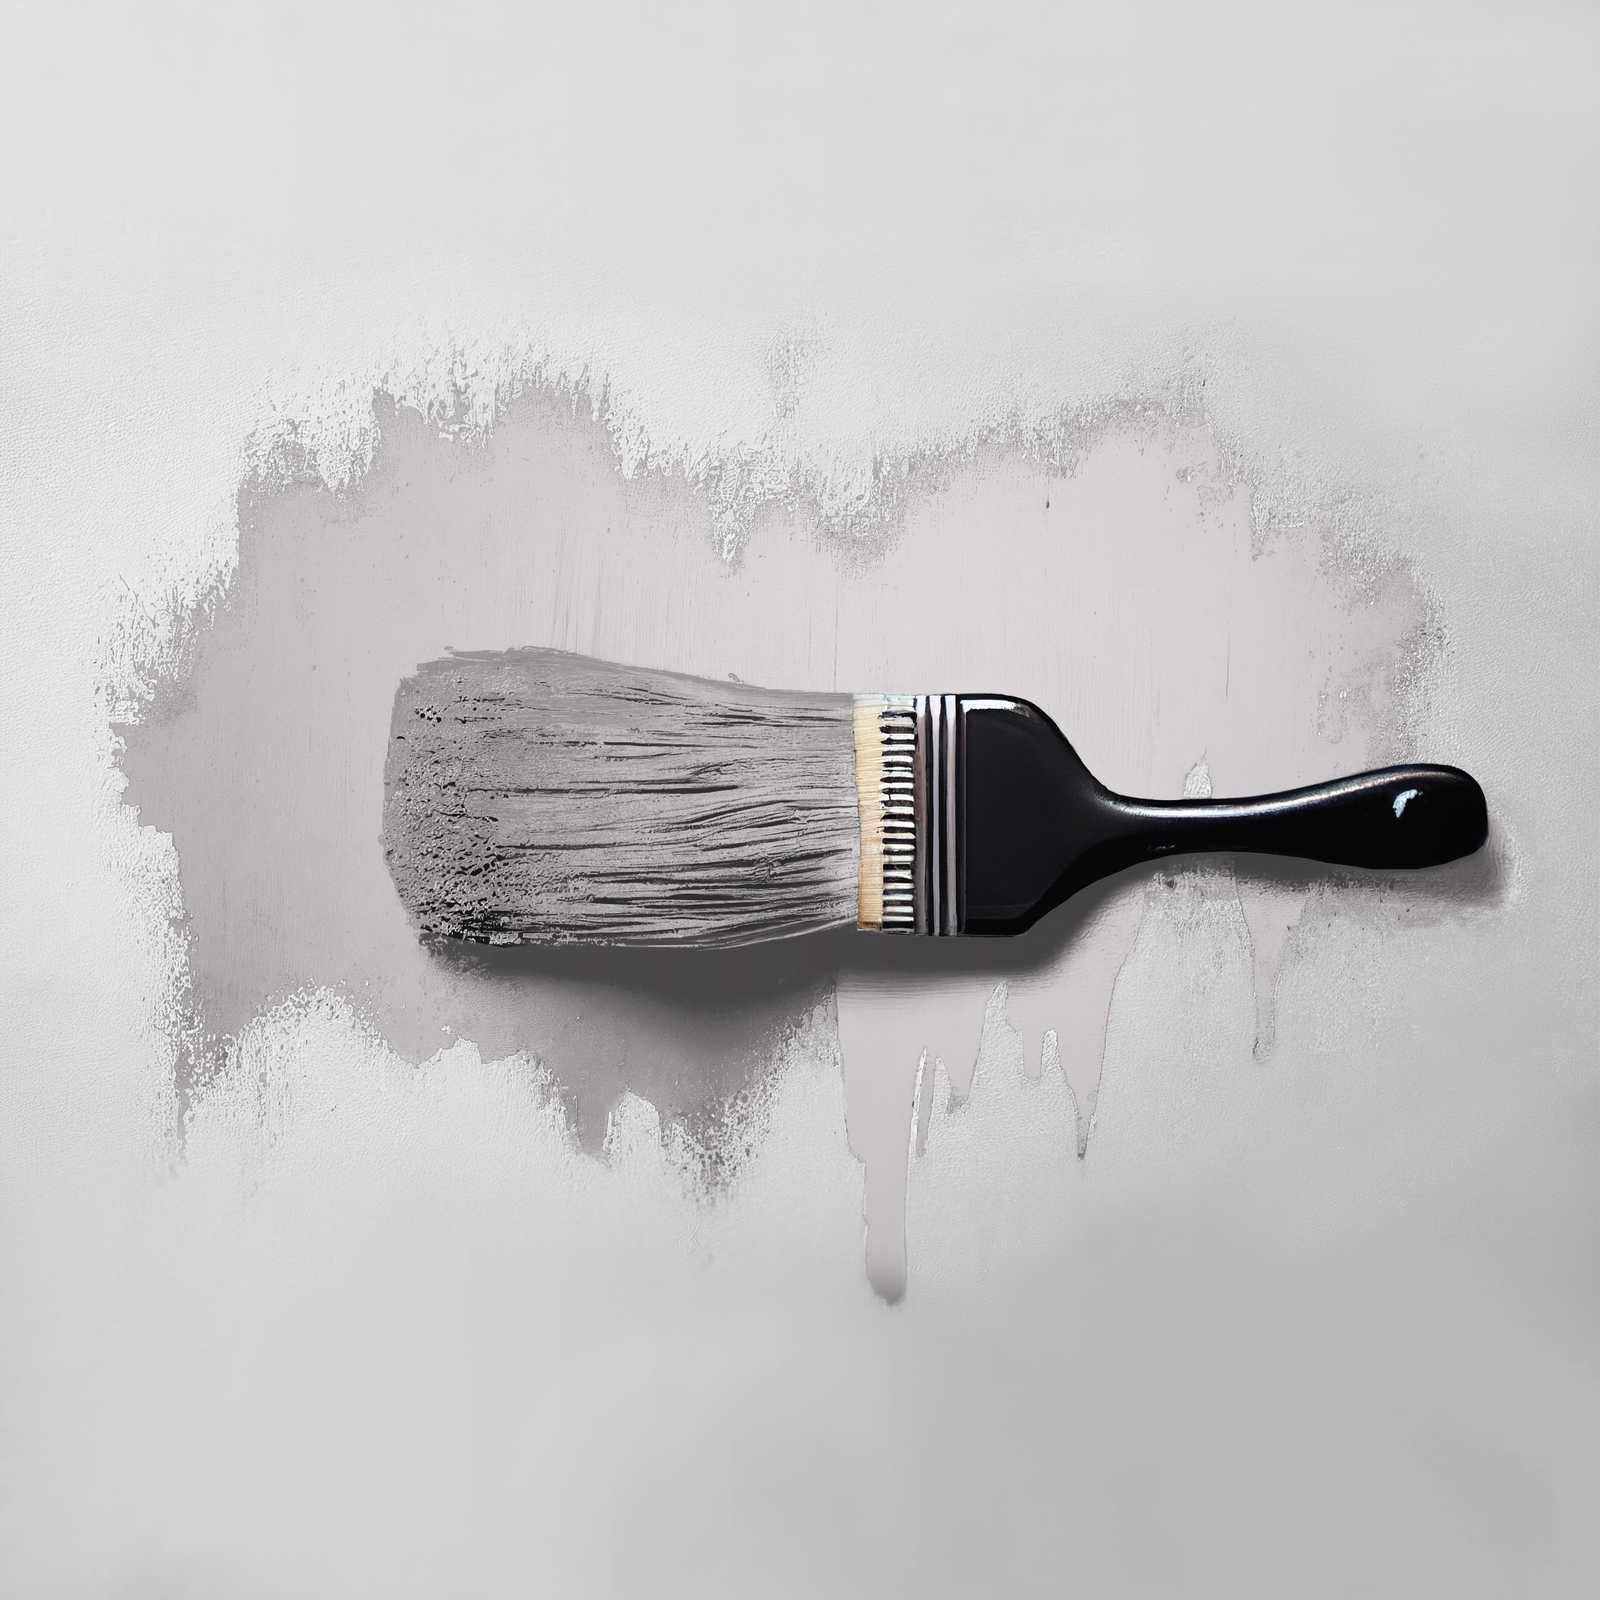             Pittura murale TCK2001 »Salty Shrimp« in grigio chiaro caldo – 5,0 litri
        